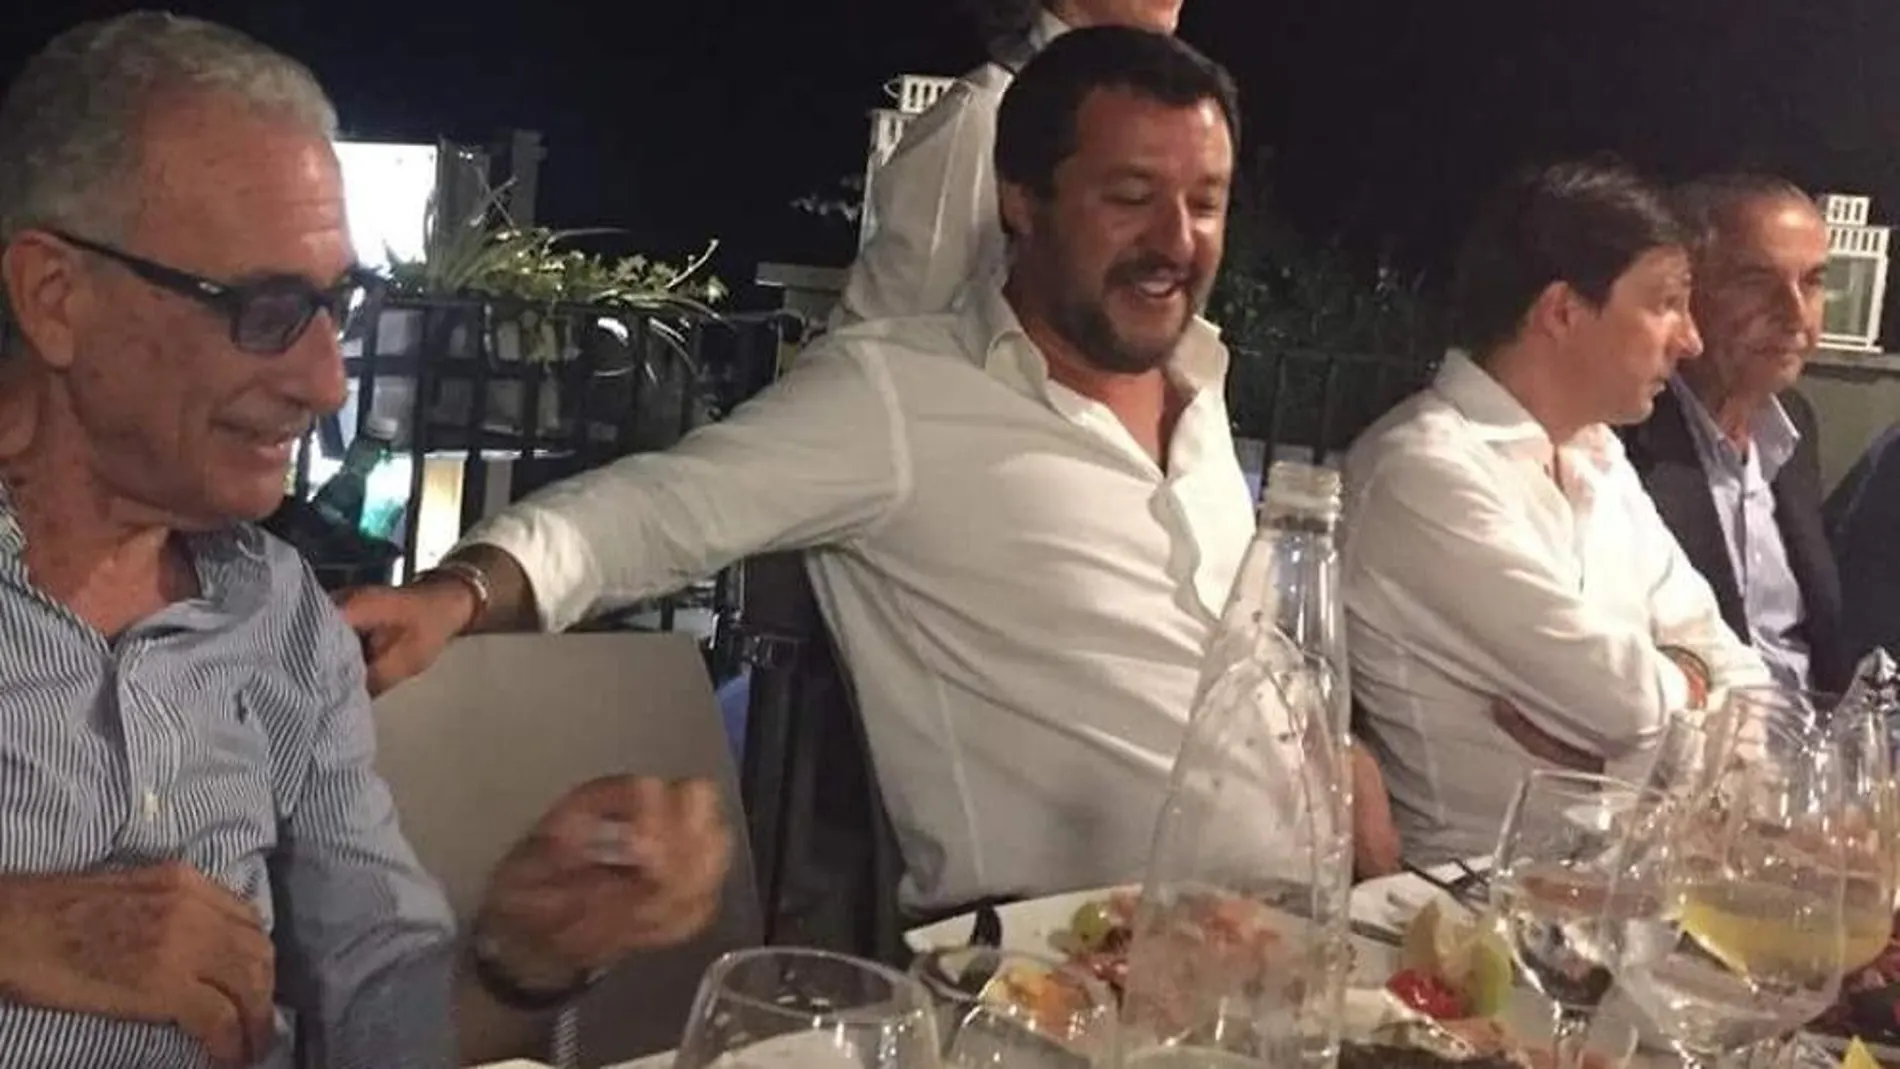 El ministro de Interior de Italia, Matteo Salvini, en una fiesta de la Liga Norte, en la noche de la tragedia de Génova